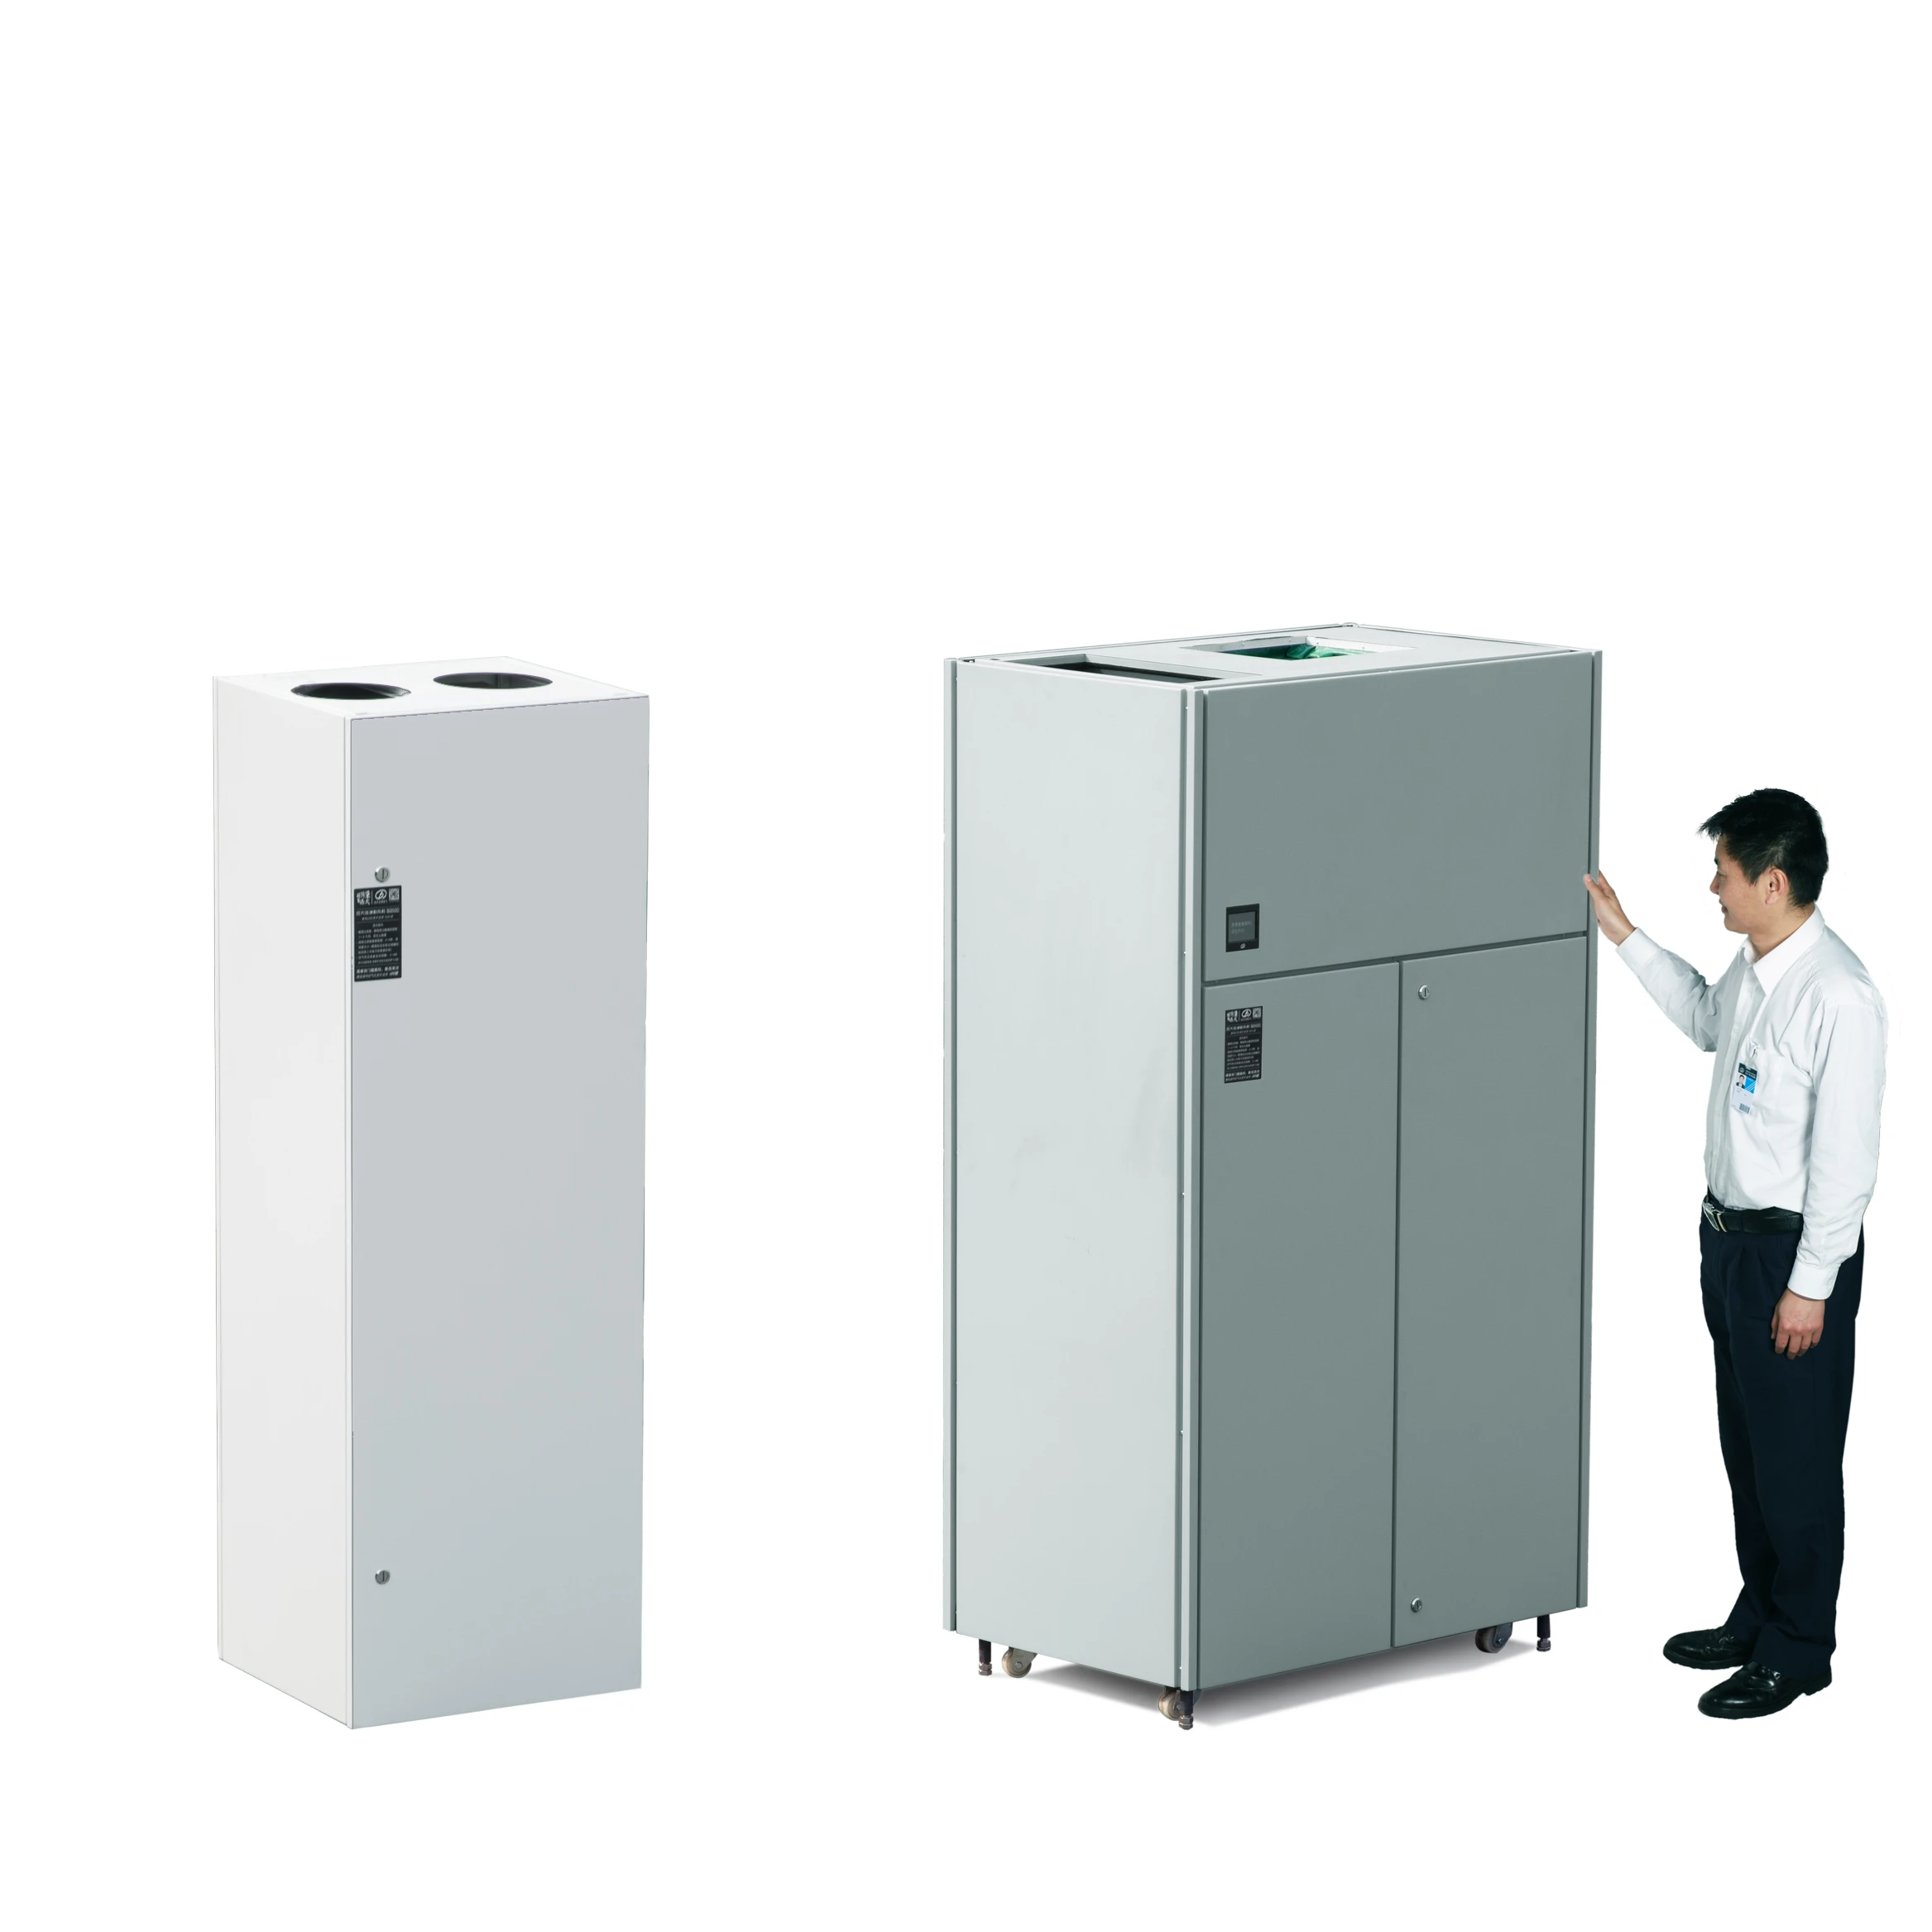 SQ1500 Big industrial heat recovery ventilation system with ventilation exhaust fan fresh air erv ventilator